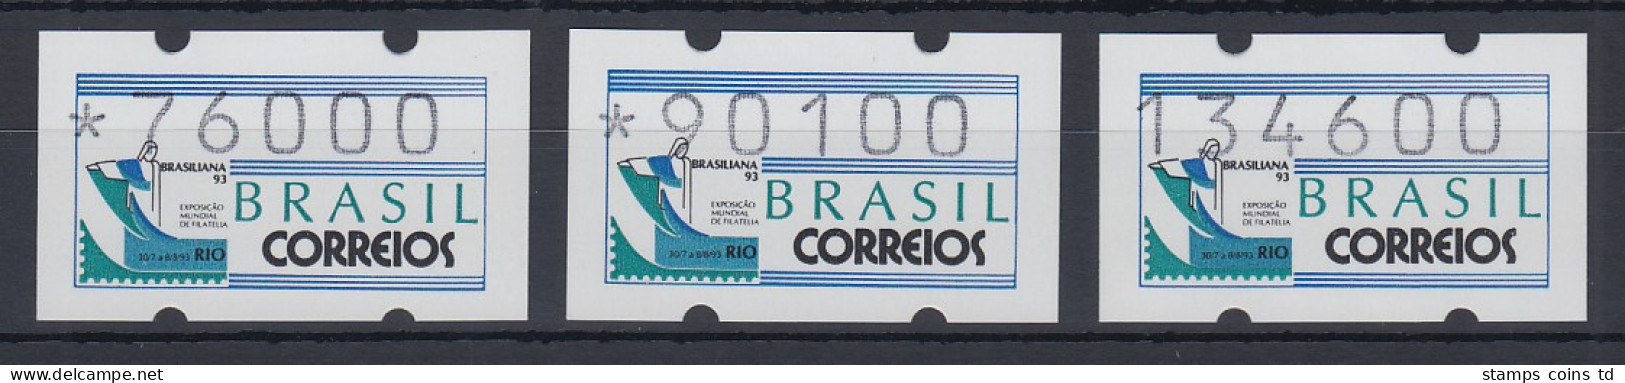 Brasilien Klüssendorf-ATM 1993 BRASILIANA Mi-Nr 5 Satz 76000 - 90100 - 134600 ** - Frankeervignetten (Frama)